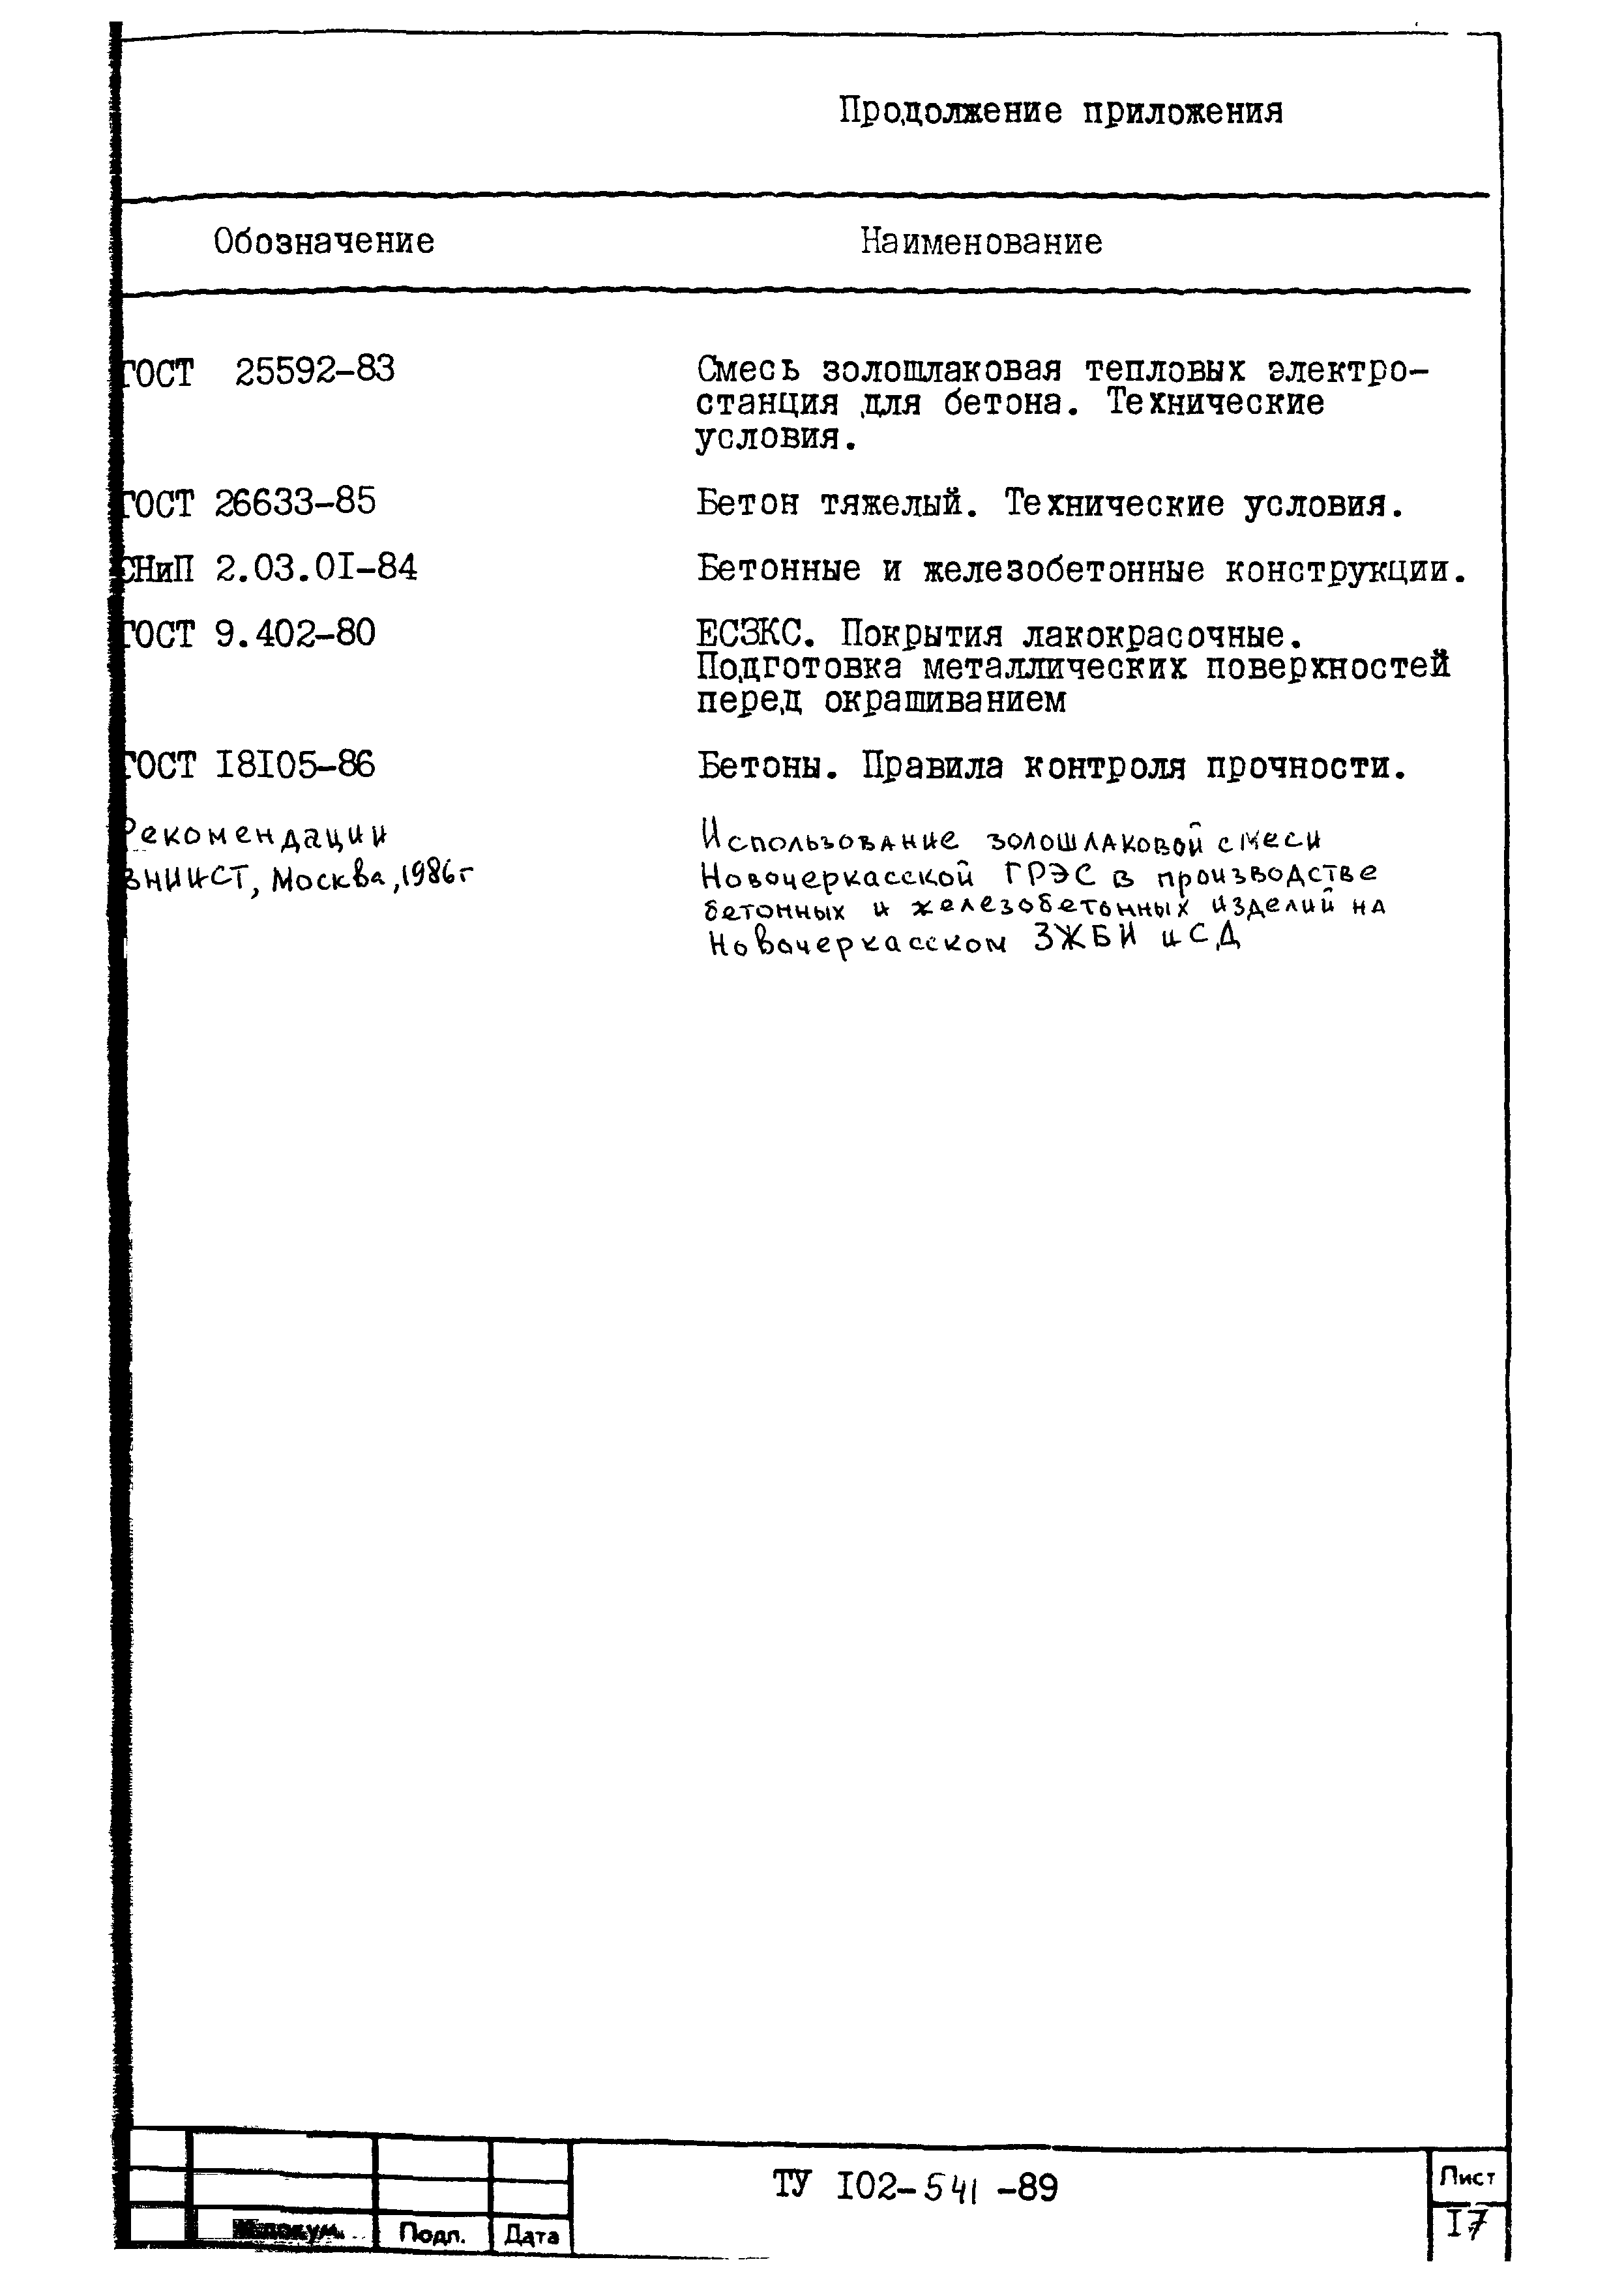 ТУ 102-541-89